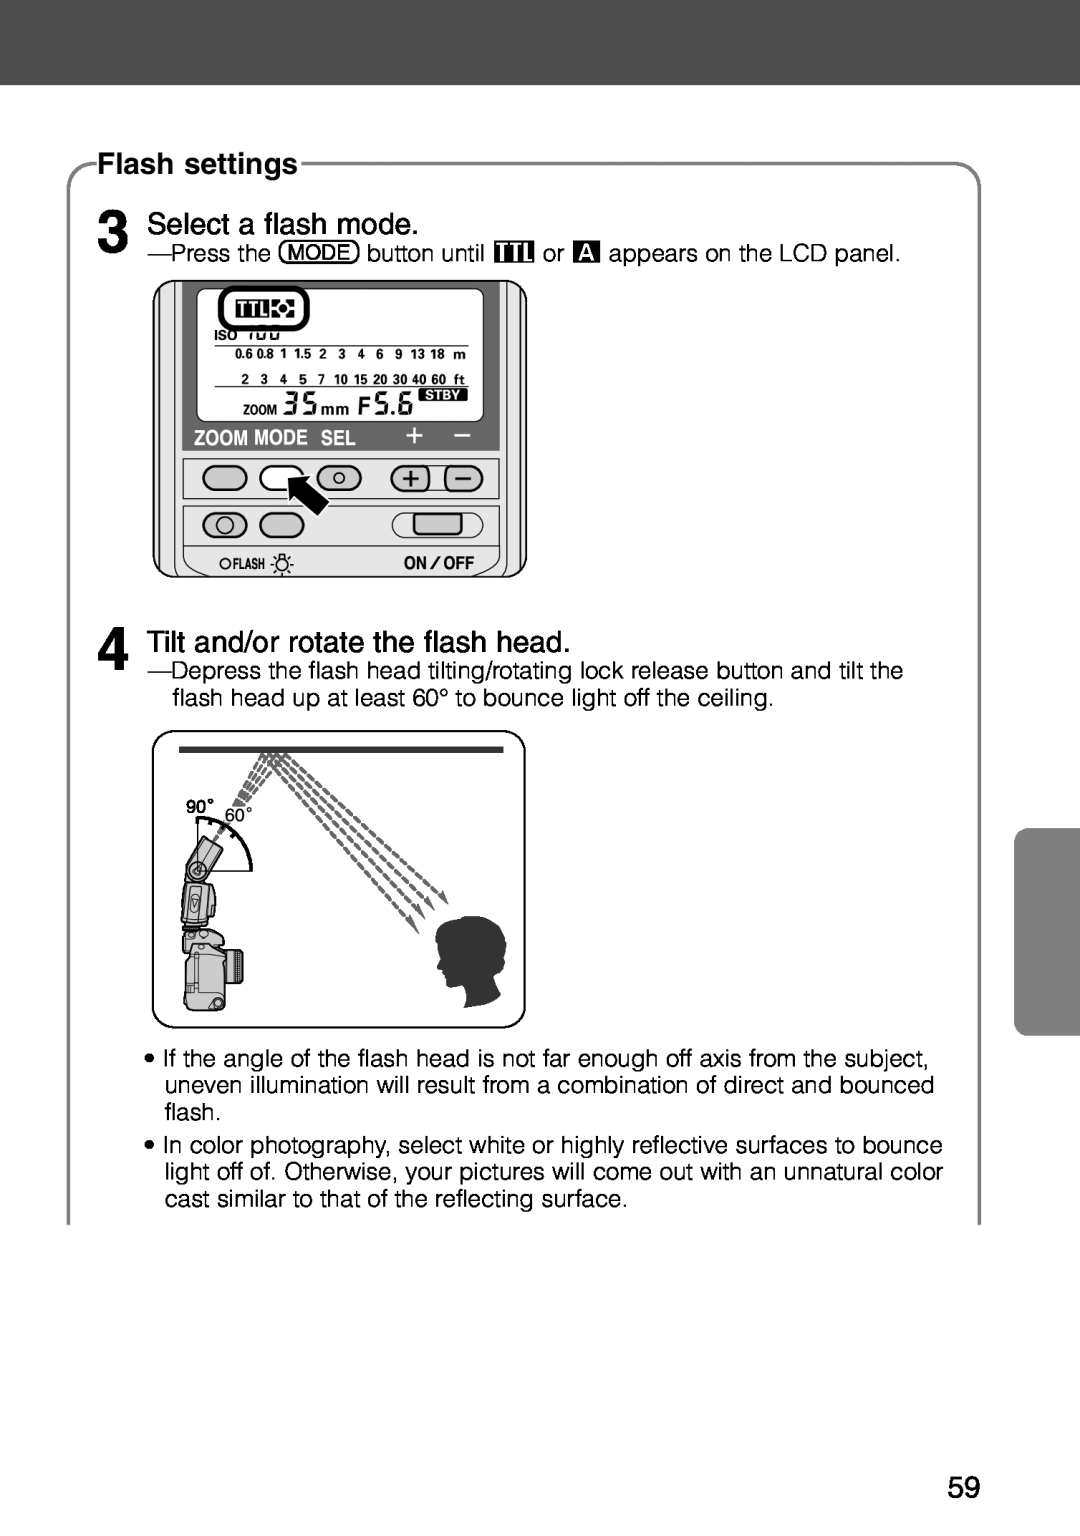 Nikon SB-28 instruction manual Flash settings, Select a flash mode, Tilt and/or rotate the flash head 